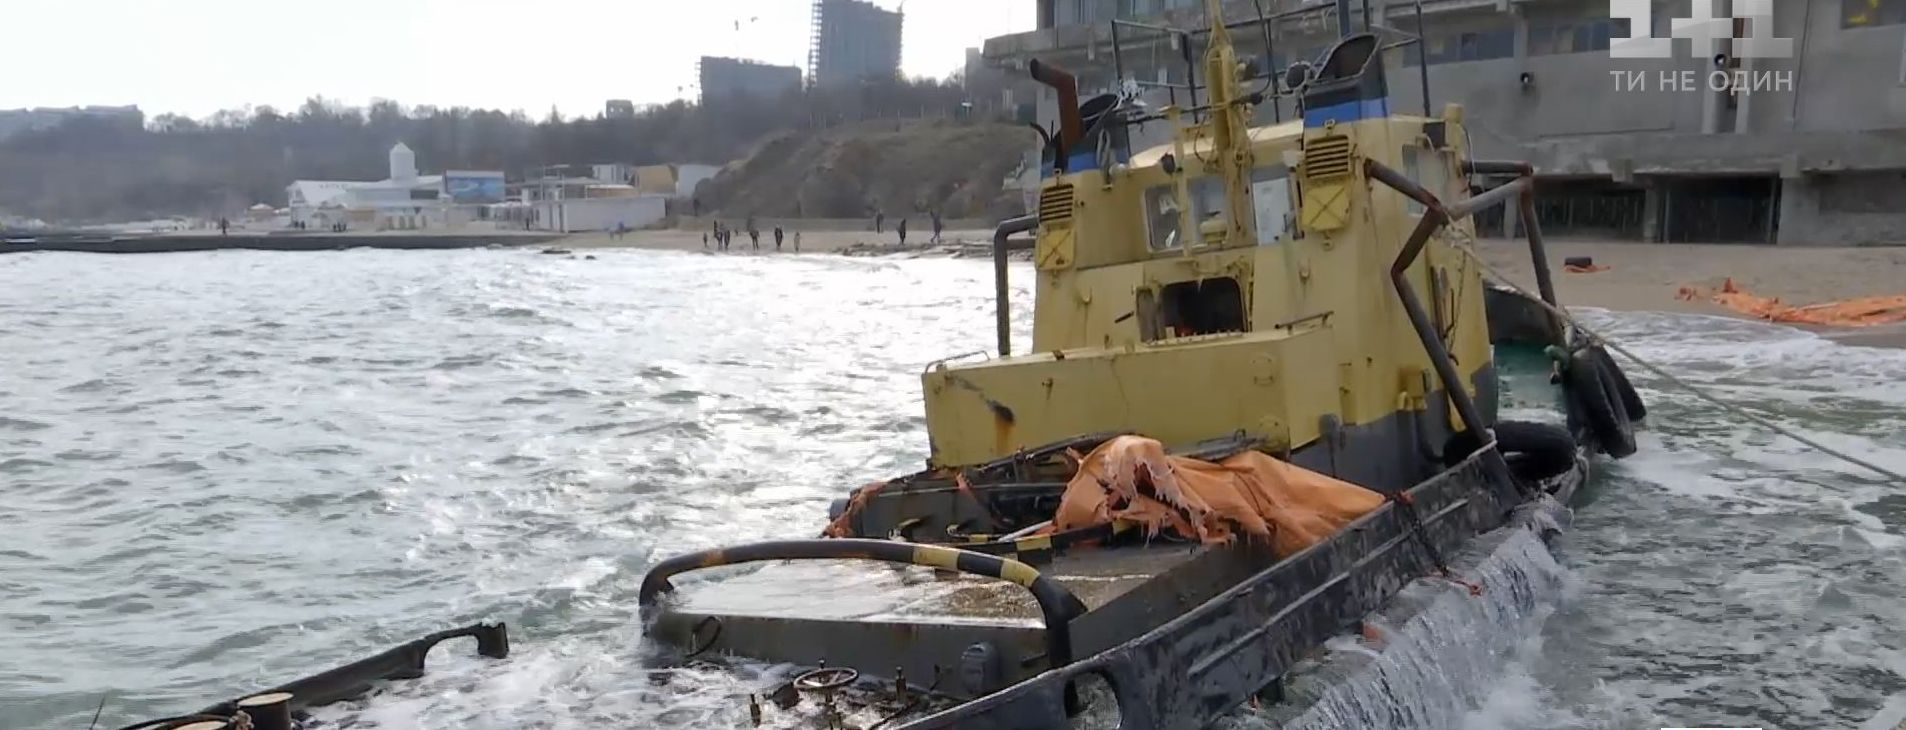 В Одессе буксир контрабандистов застрял на пляже и загрязняет воду